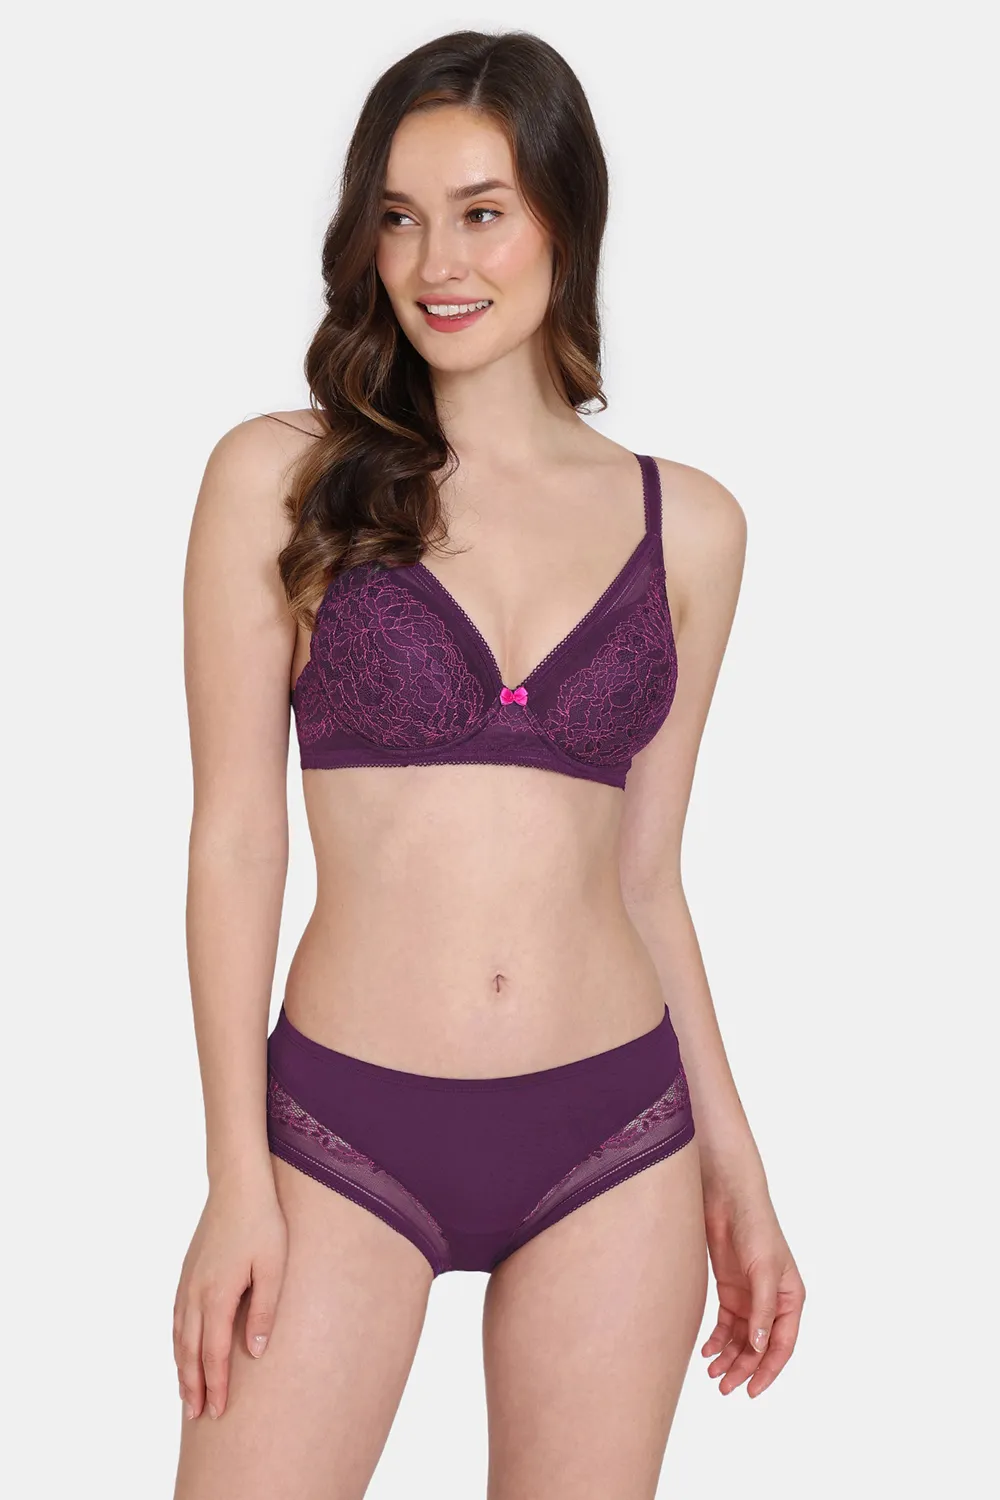 https://cdn.zivame.com/ik-seo/media/catalog/product/1/_/1_68_60/zivame-primrose-padded-wired-3-4th-coverage-lace-bra-with-hipster-panty-dark-purple.jpg